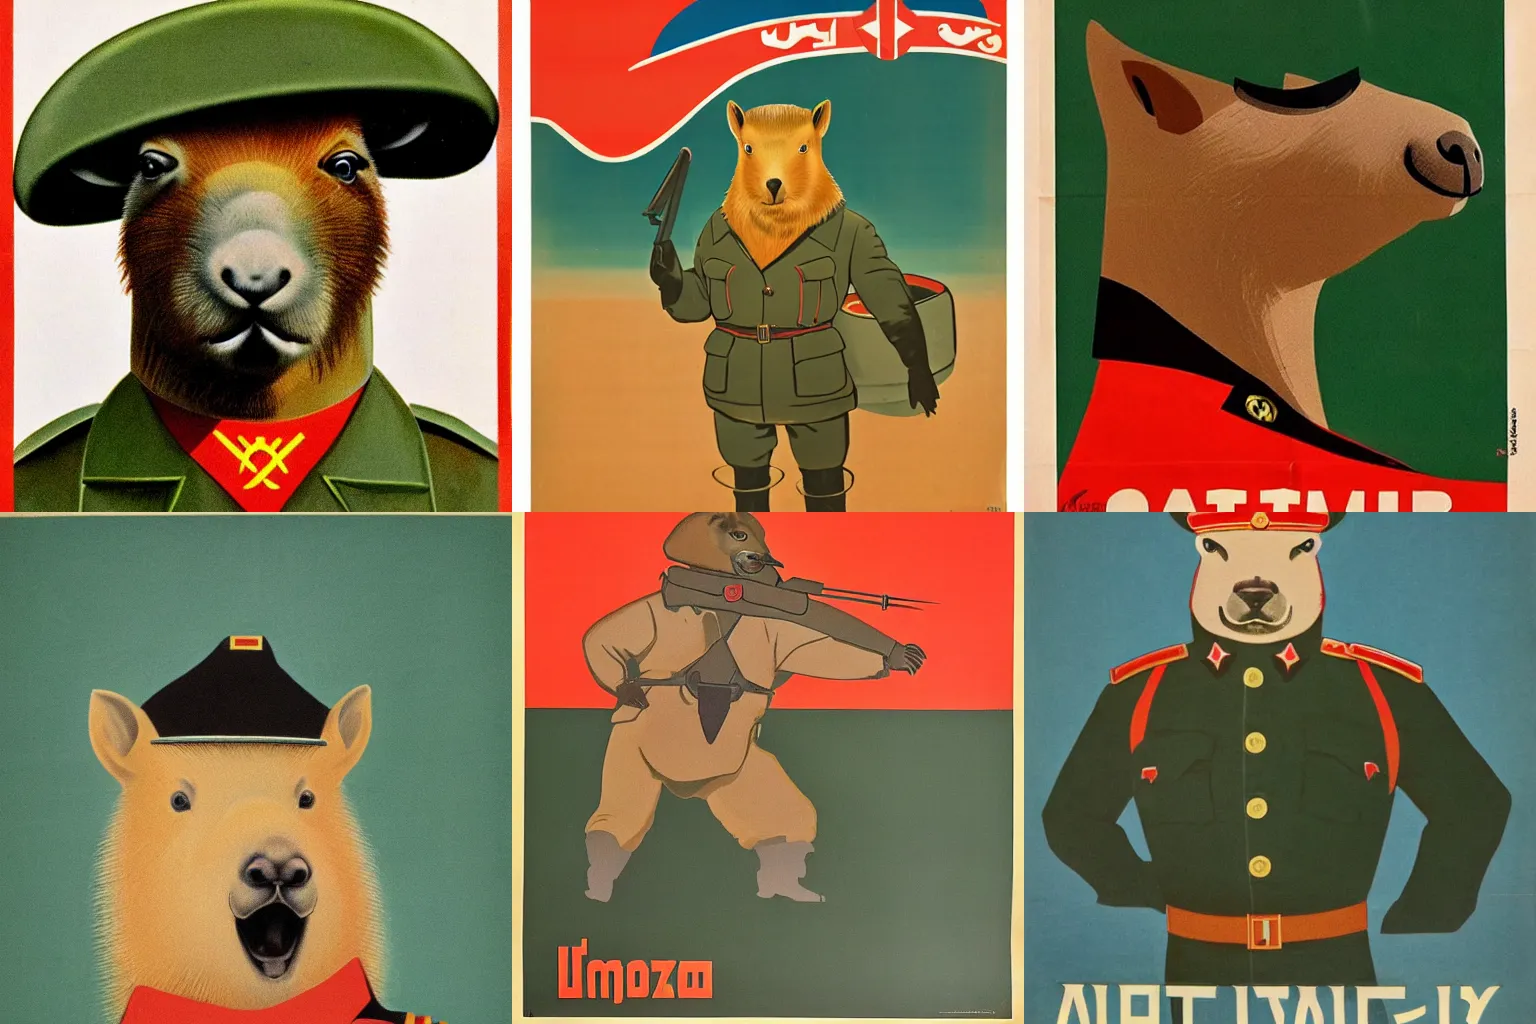 Prompt: soviet propaganda poster depicting a capybara in a military uniform